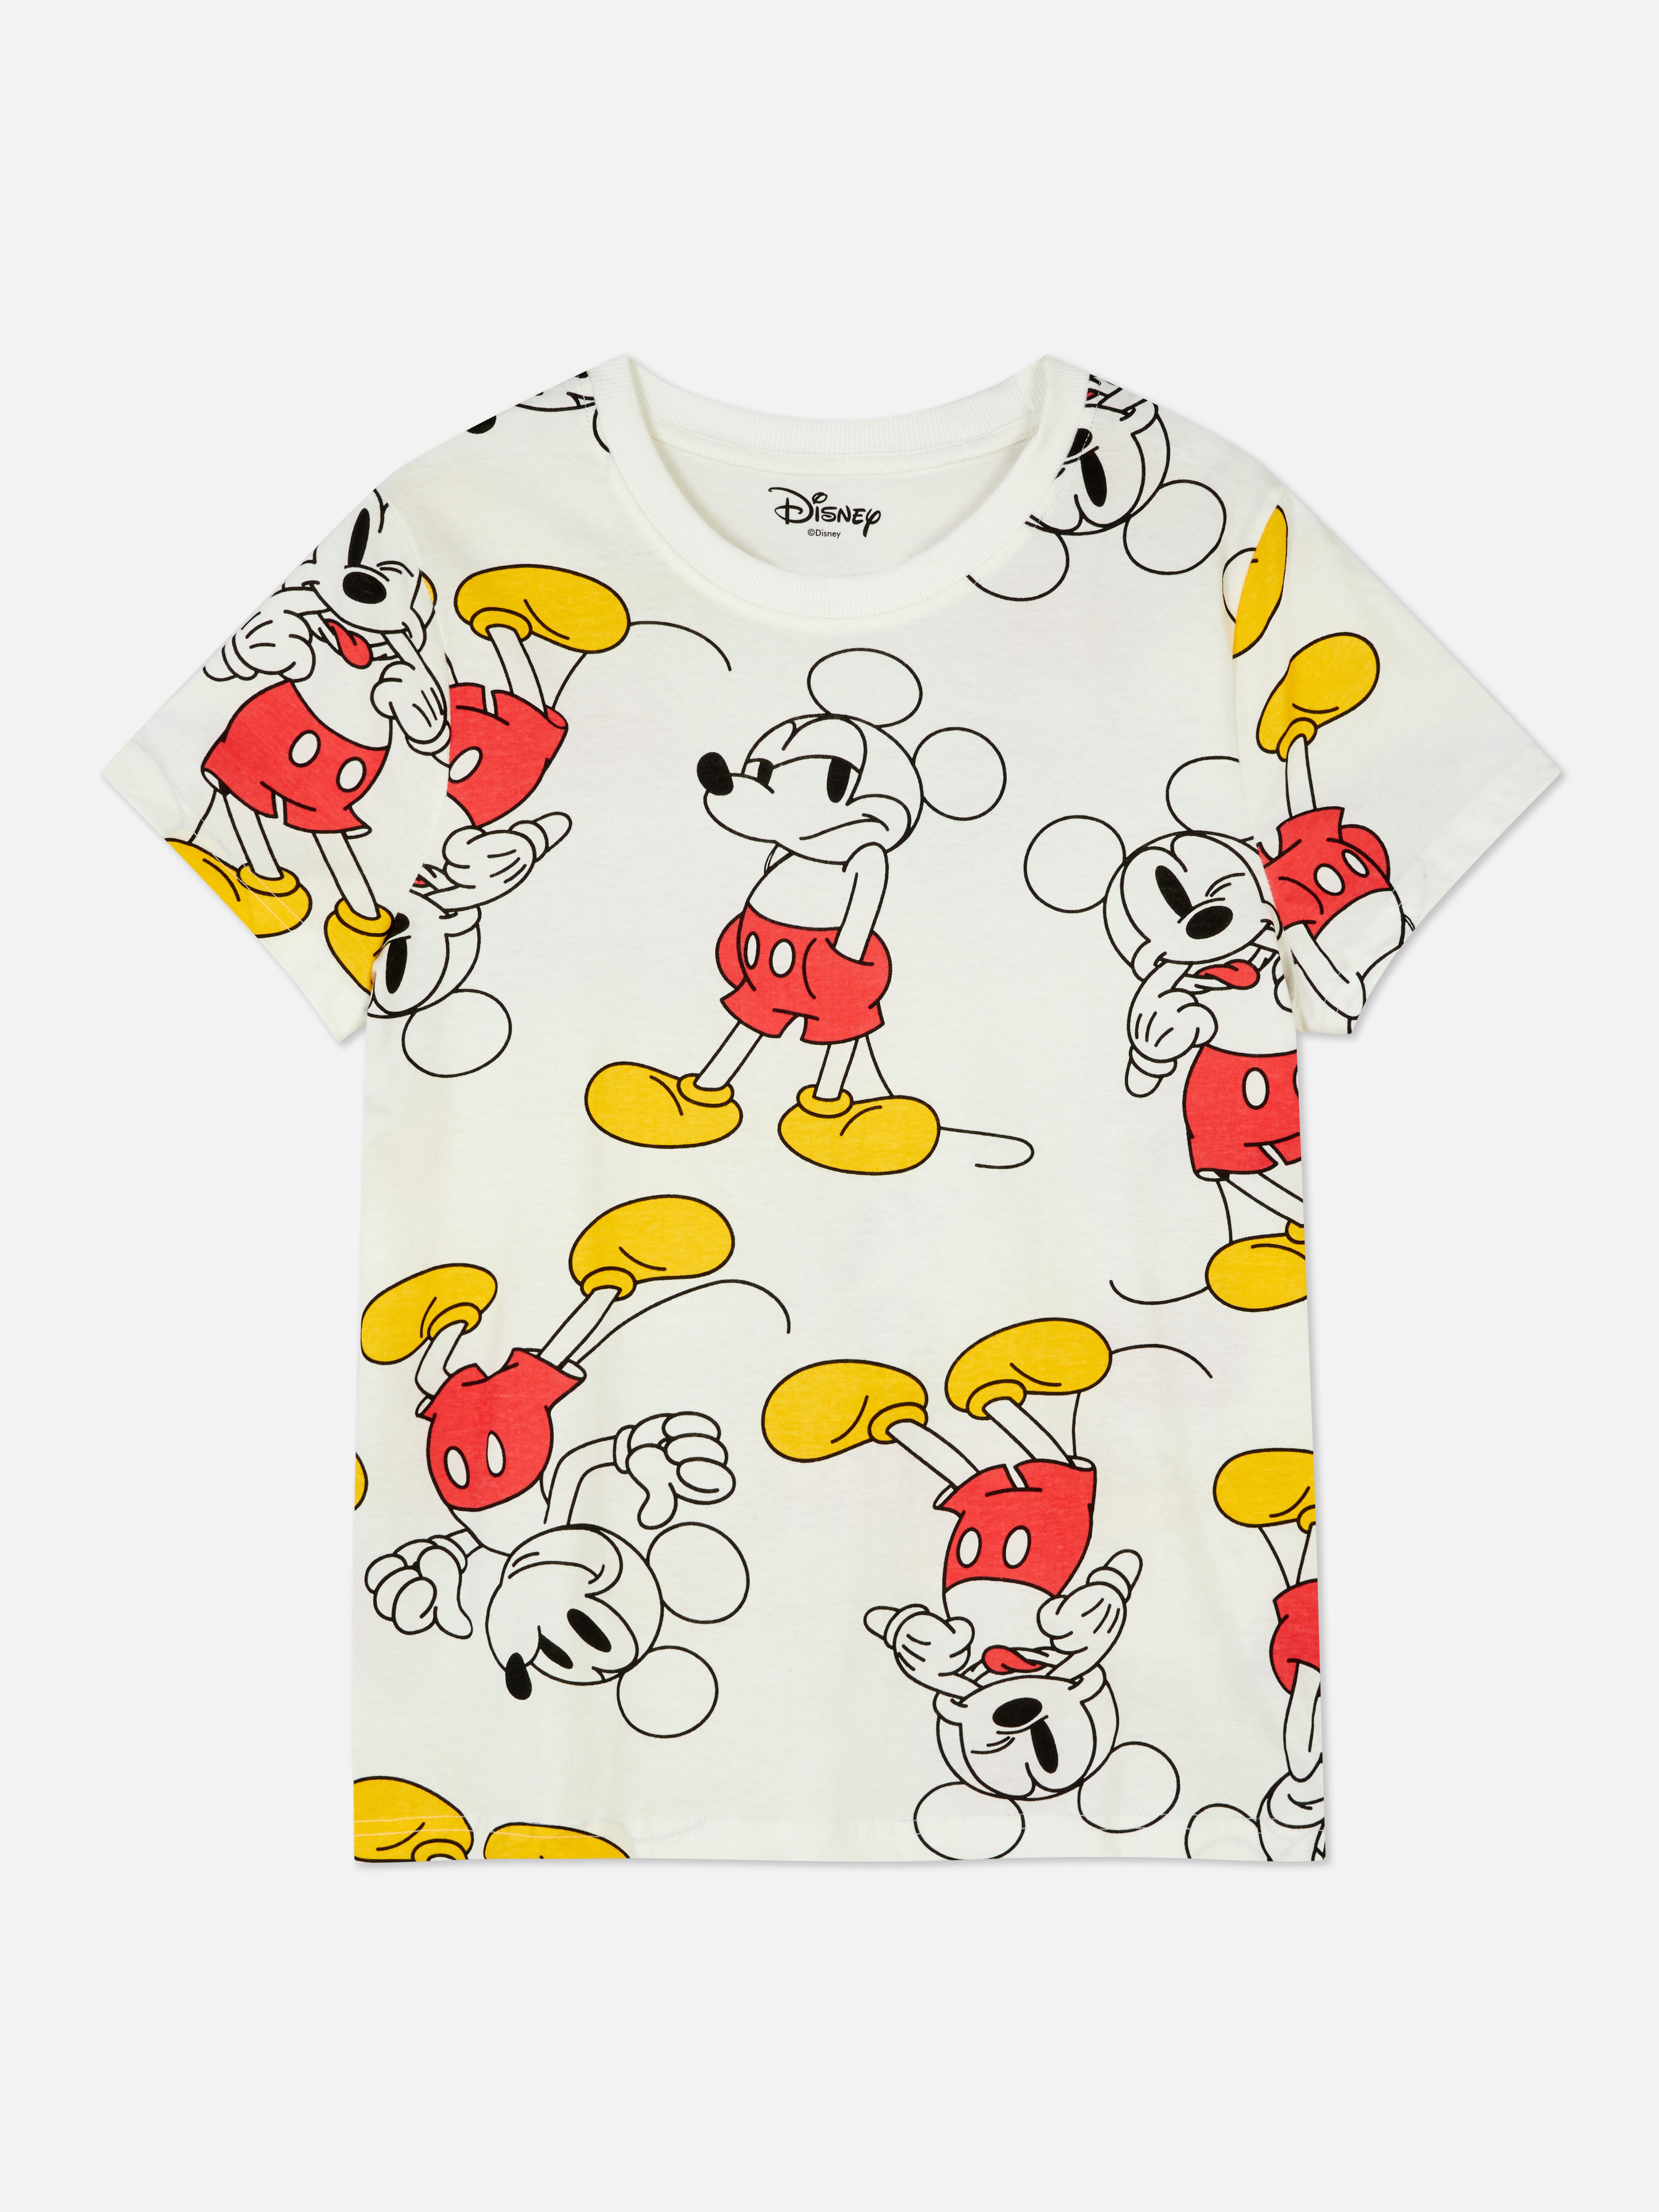 Vast en zeker Beneden afronden spuiten Disney Mickey Mouse T-Shirt | Women's Tees | Women's Style | Our Womenswear  Collections | All Primark Products | Primark